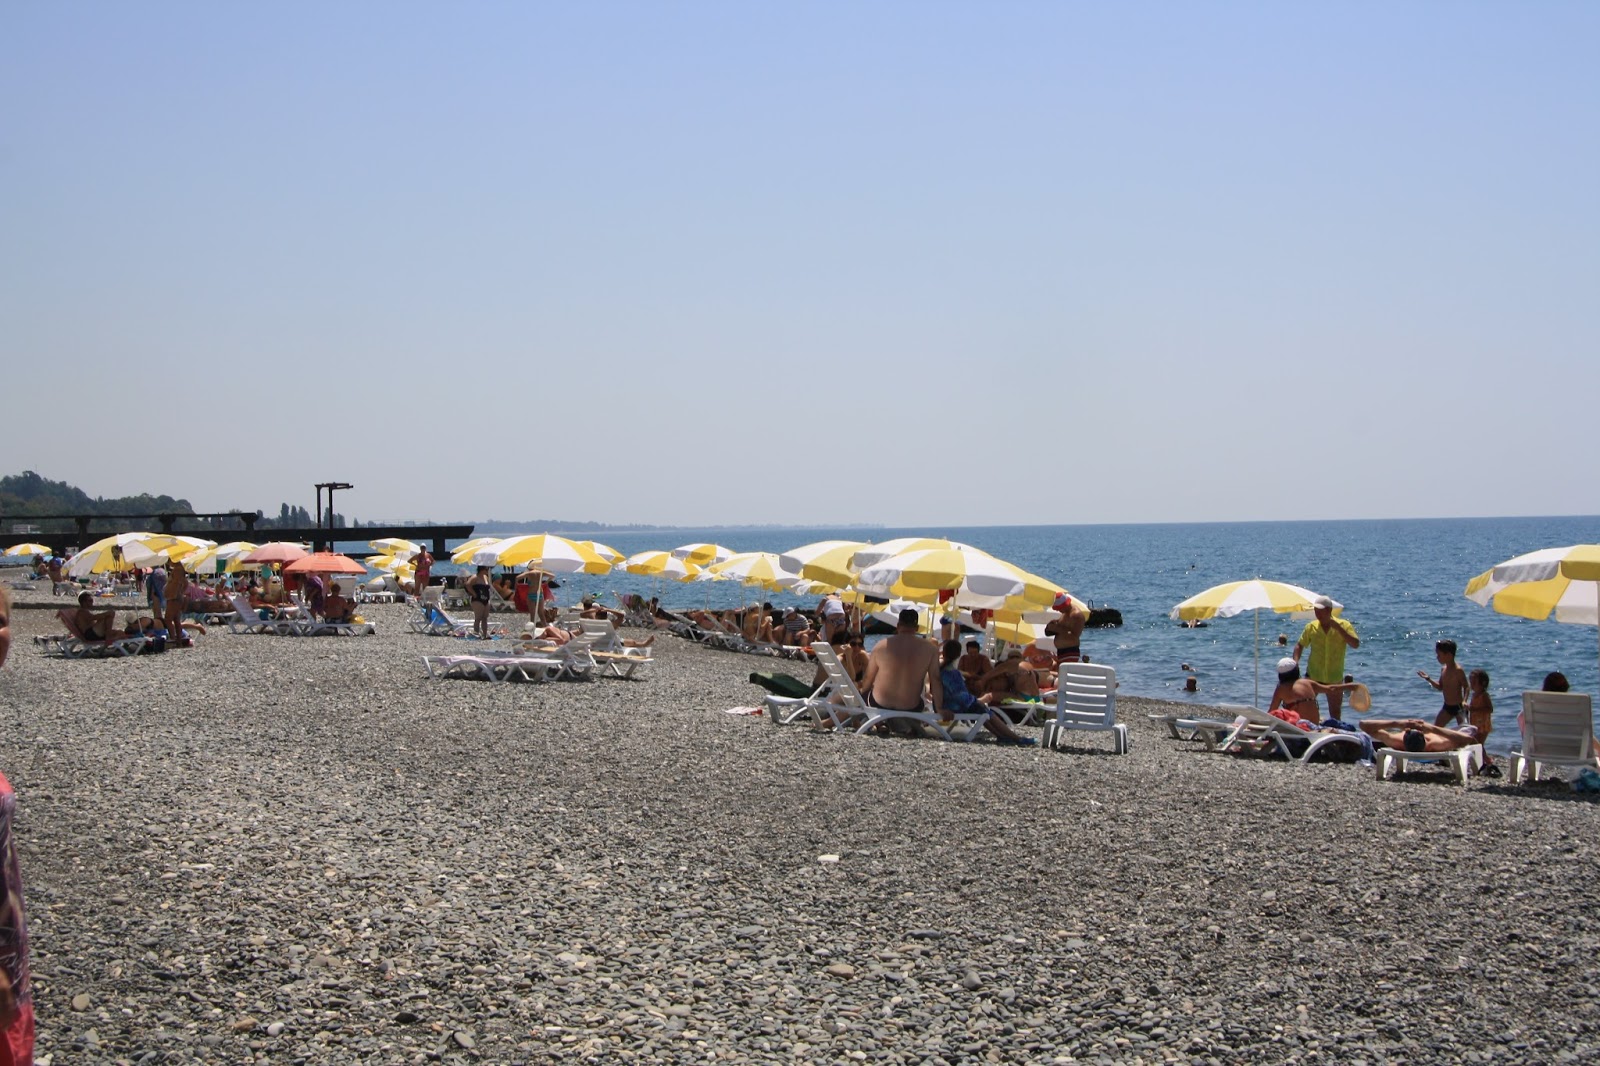 Foto de Mokko beach - lugar popular entre os apreciadores de relaxamento